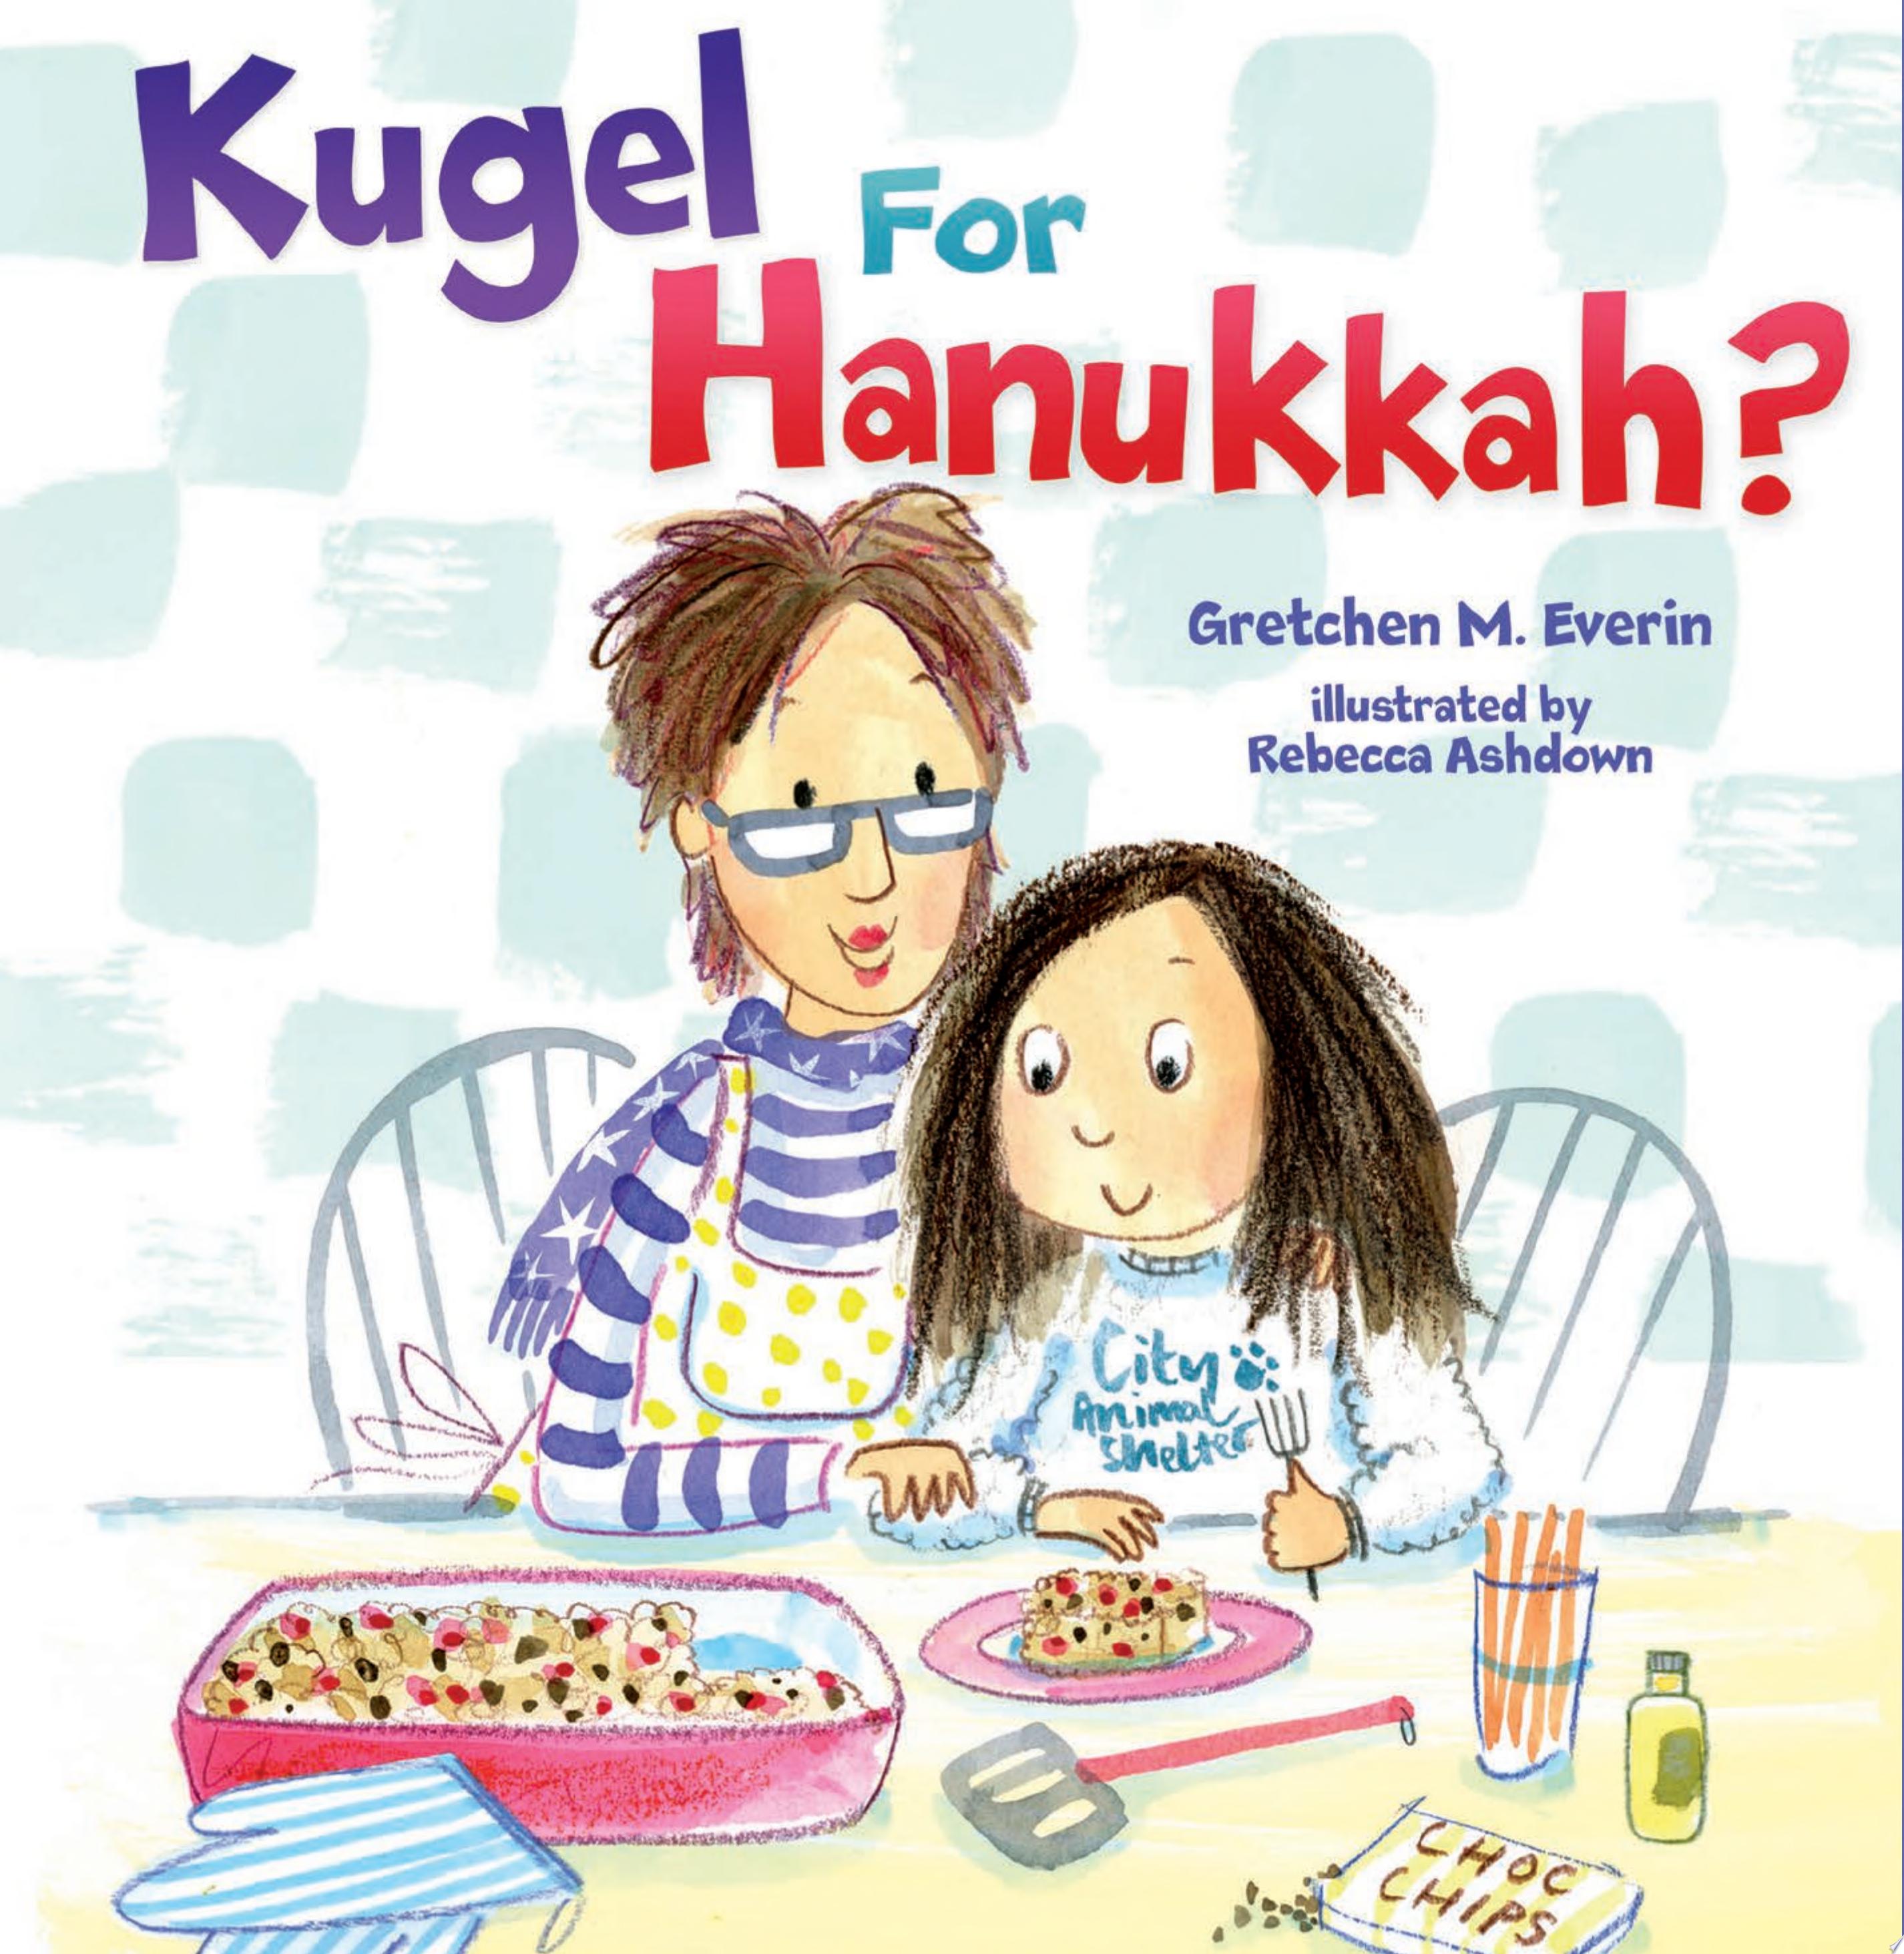 Image for "Kugel for Hanukkah?"